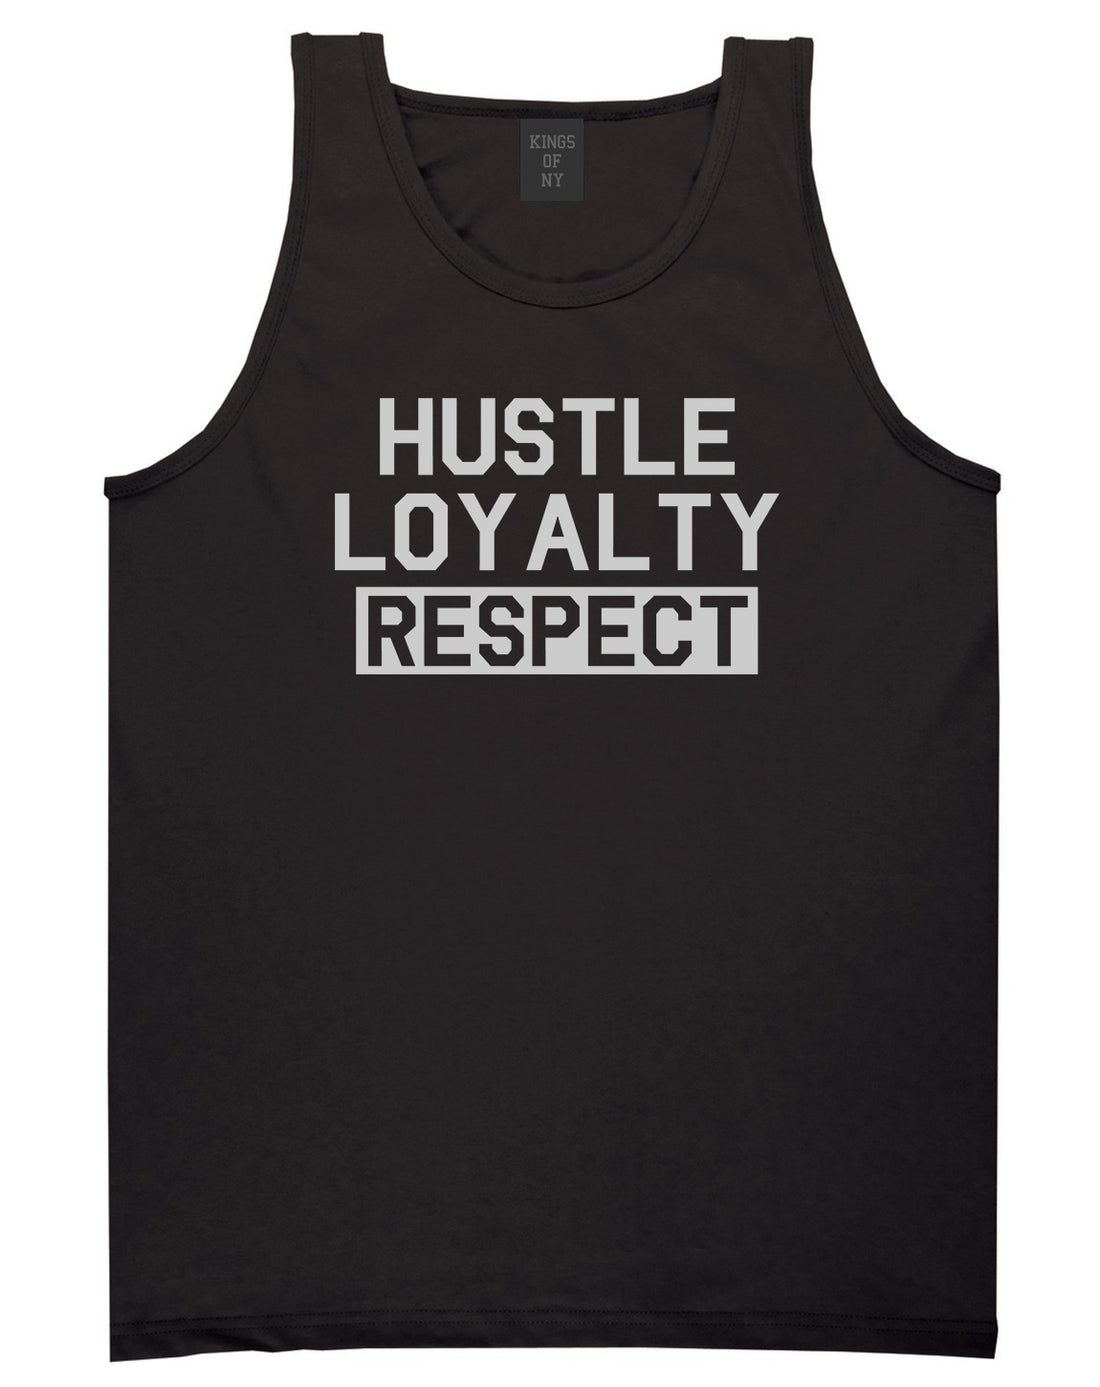 Hustle Loyalty Respect Mens Tank Top Shirt Black by Kings Of NY